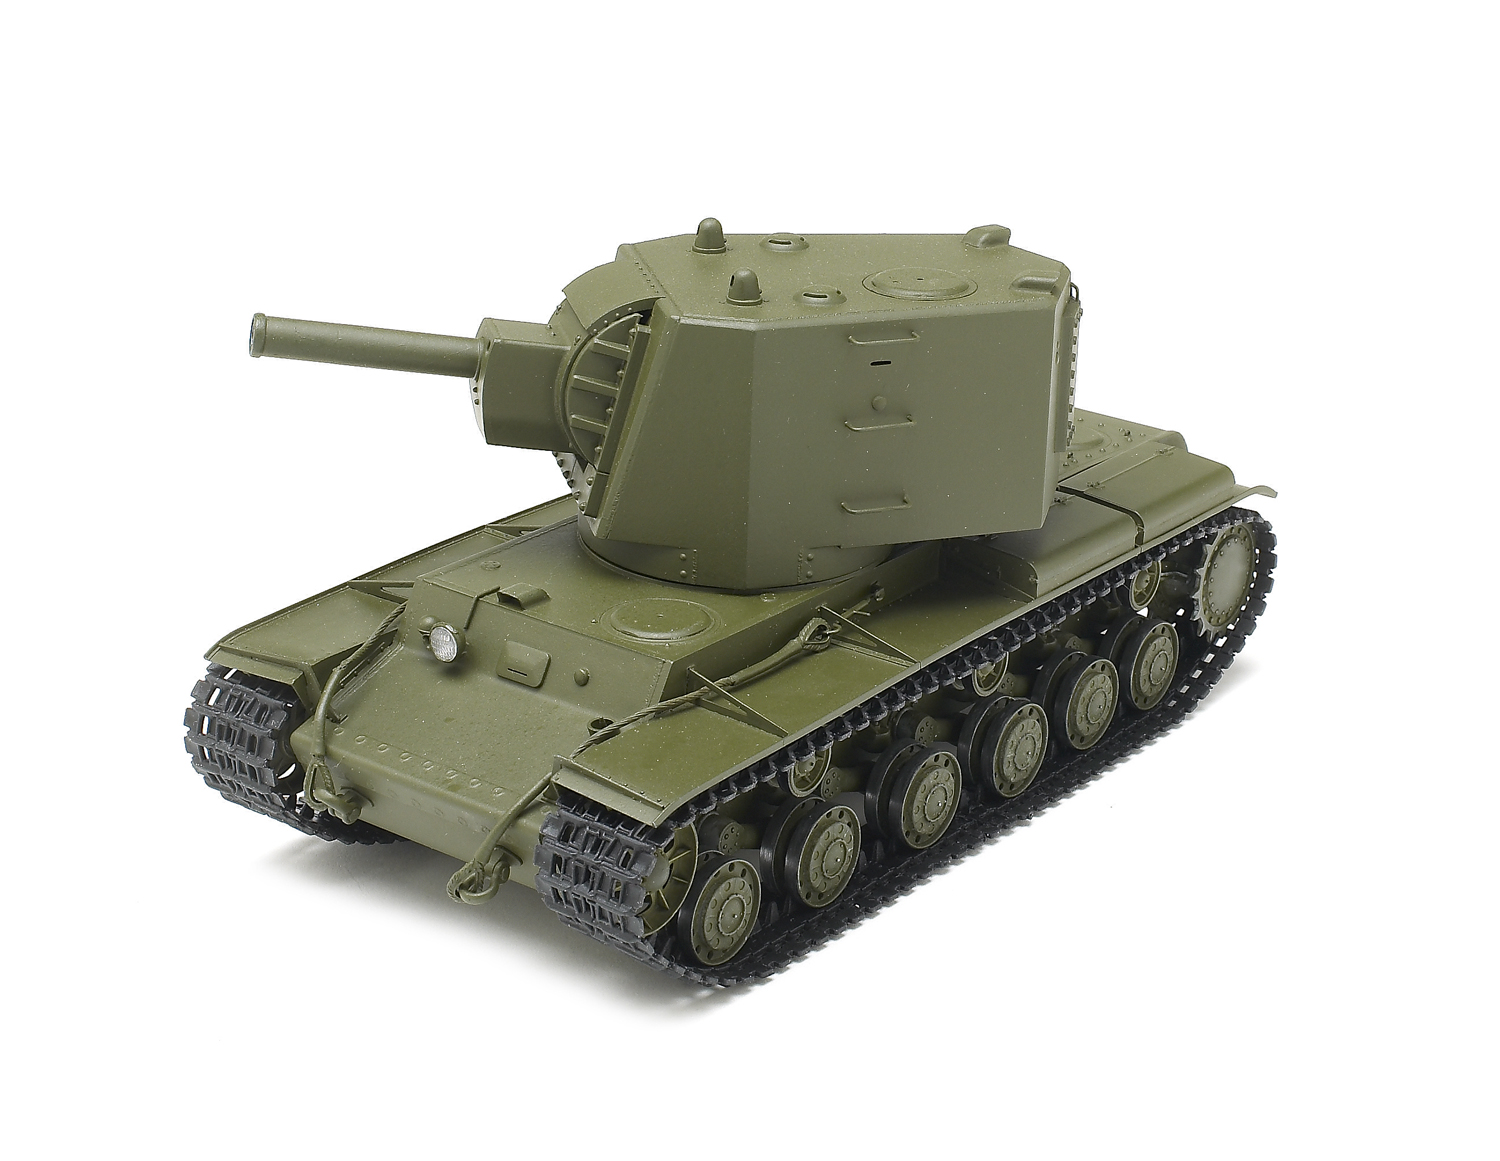 PDF Instruction : micro Panzer IV Tank in Camo 